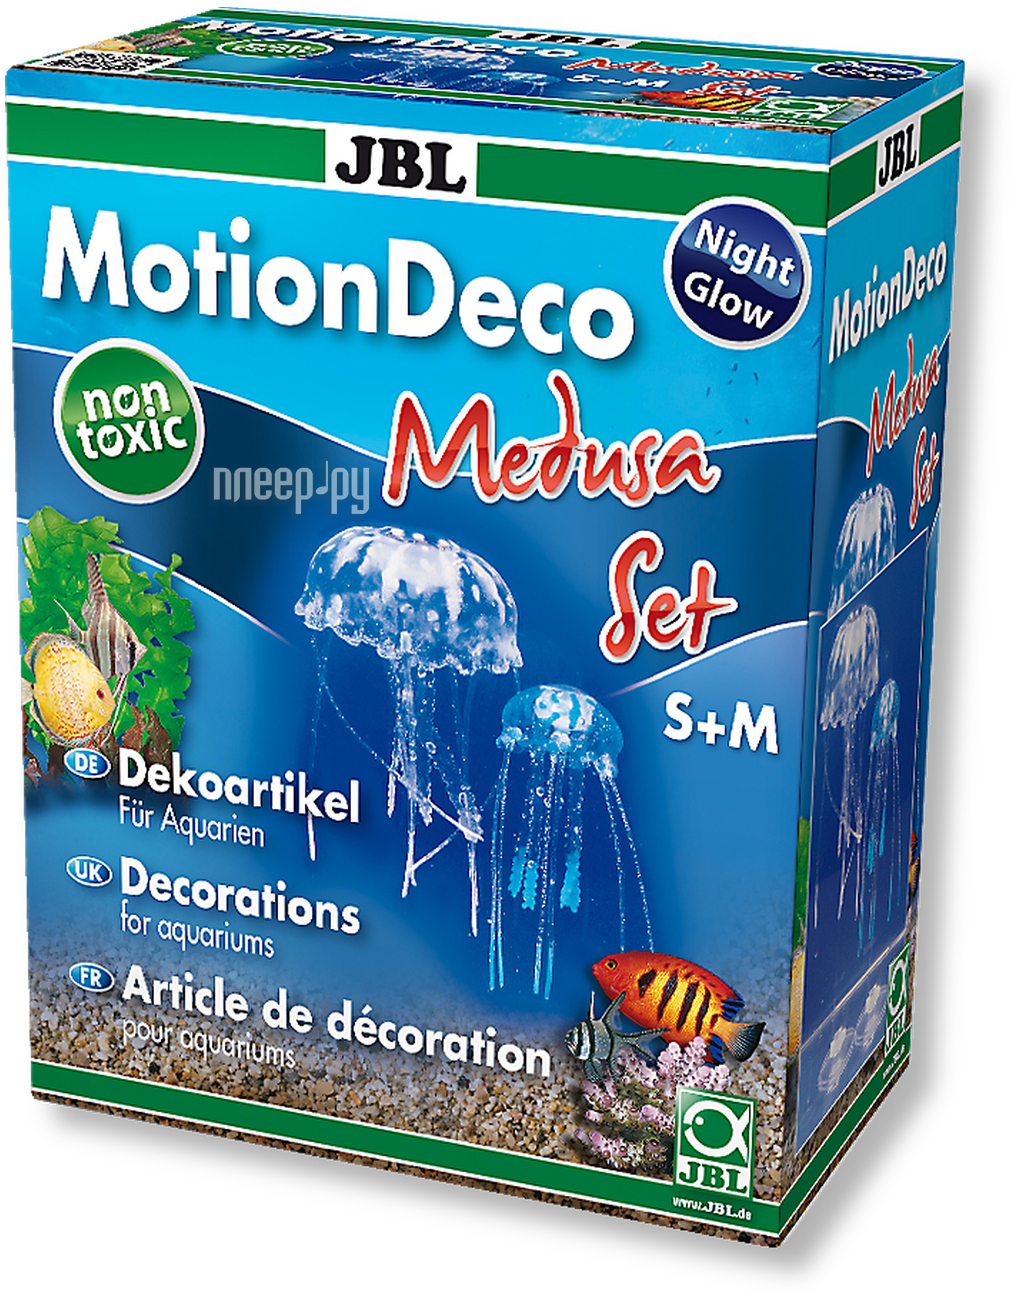 JBL MotionDeco Medusa Set S+M JBL6045200  499 